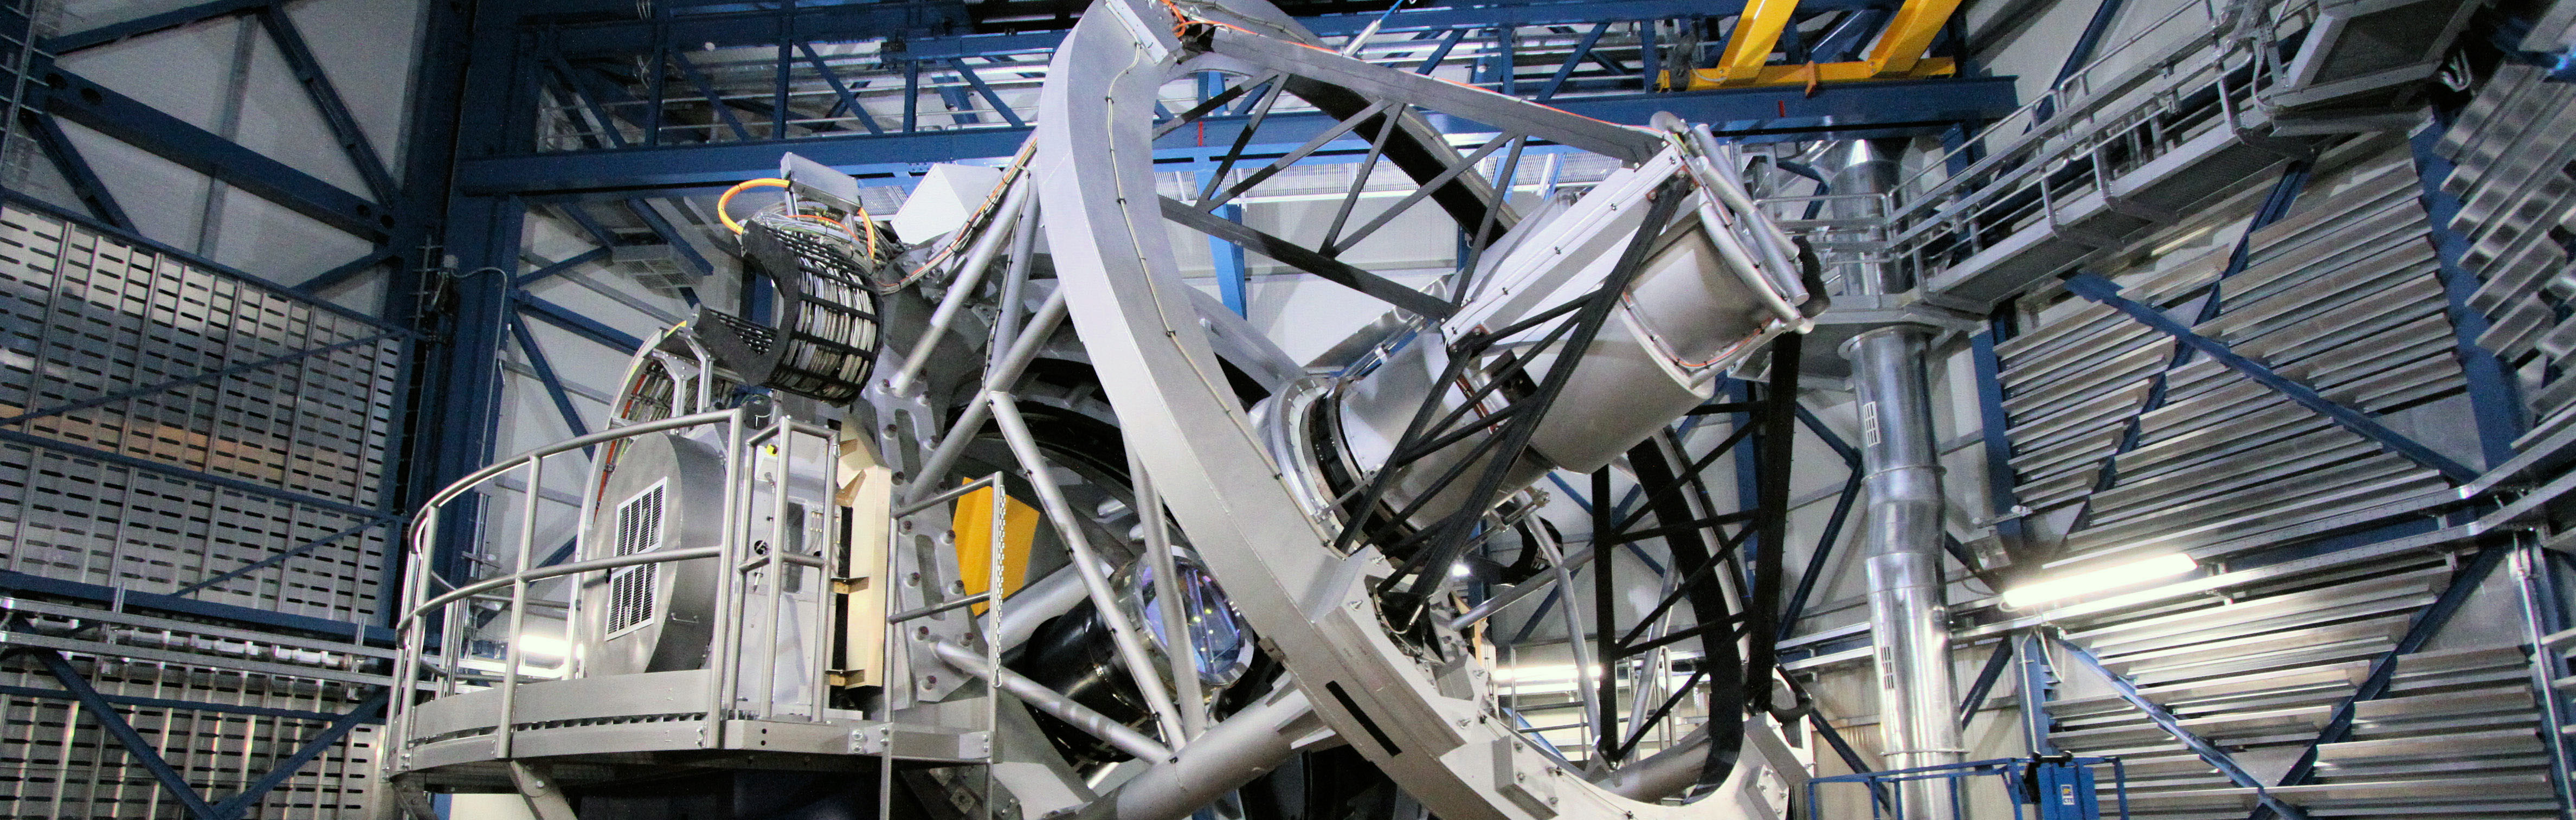 The VISTA Telescope